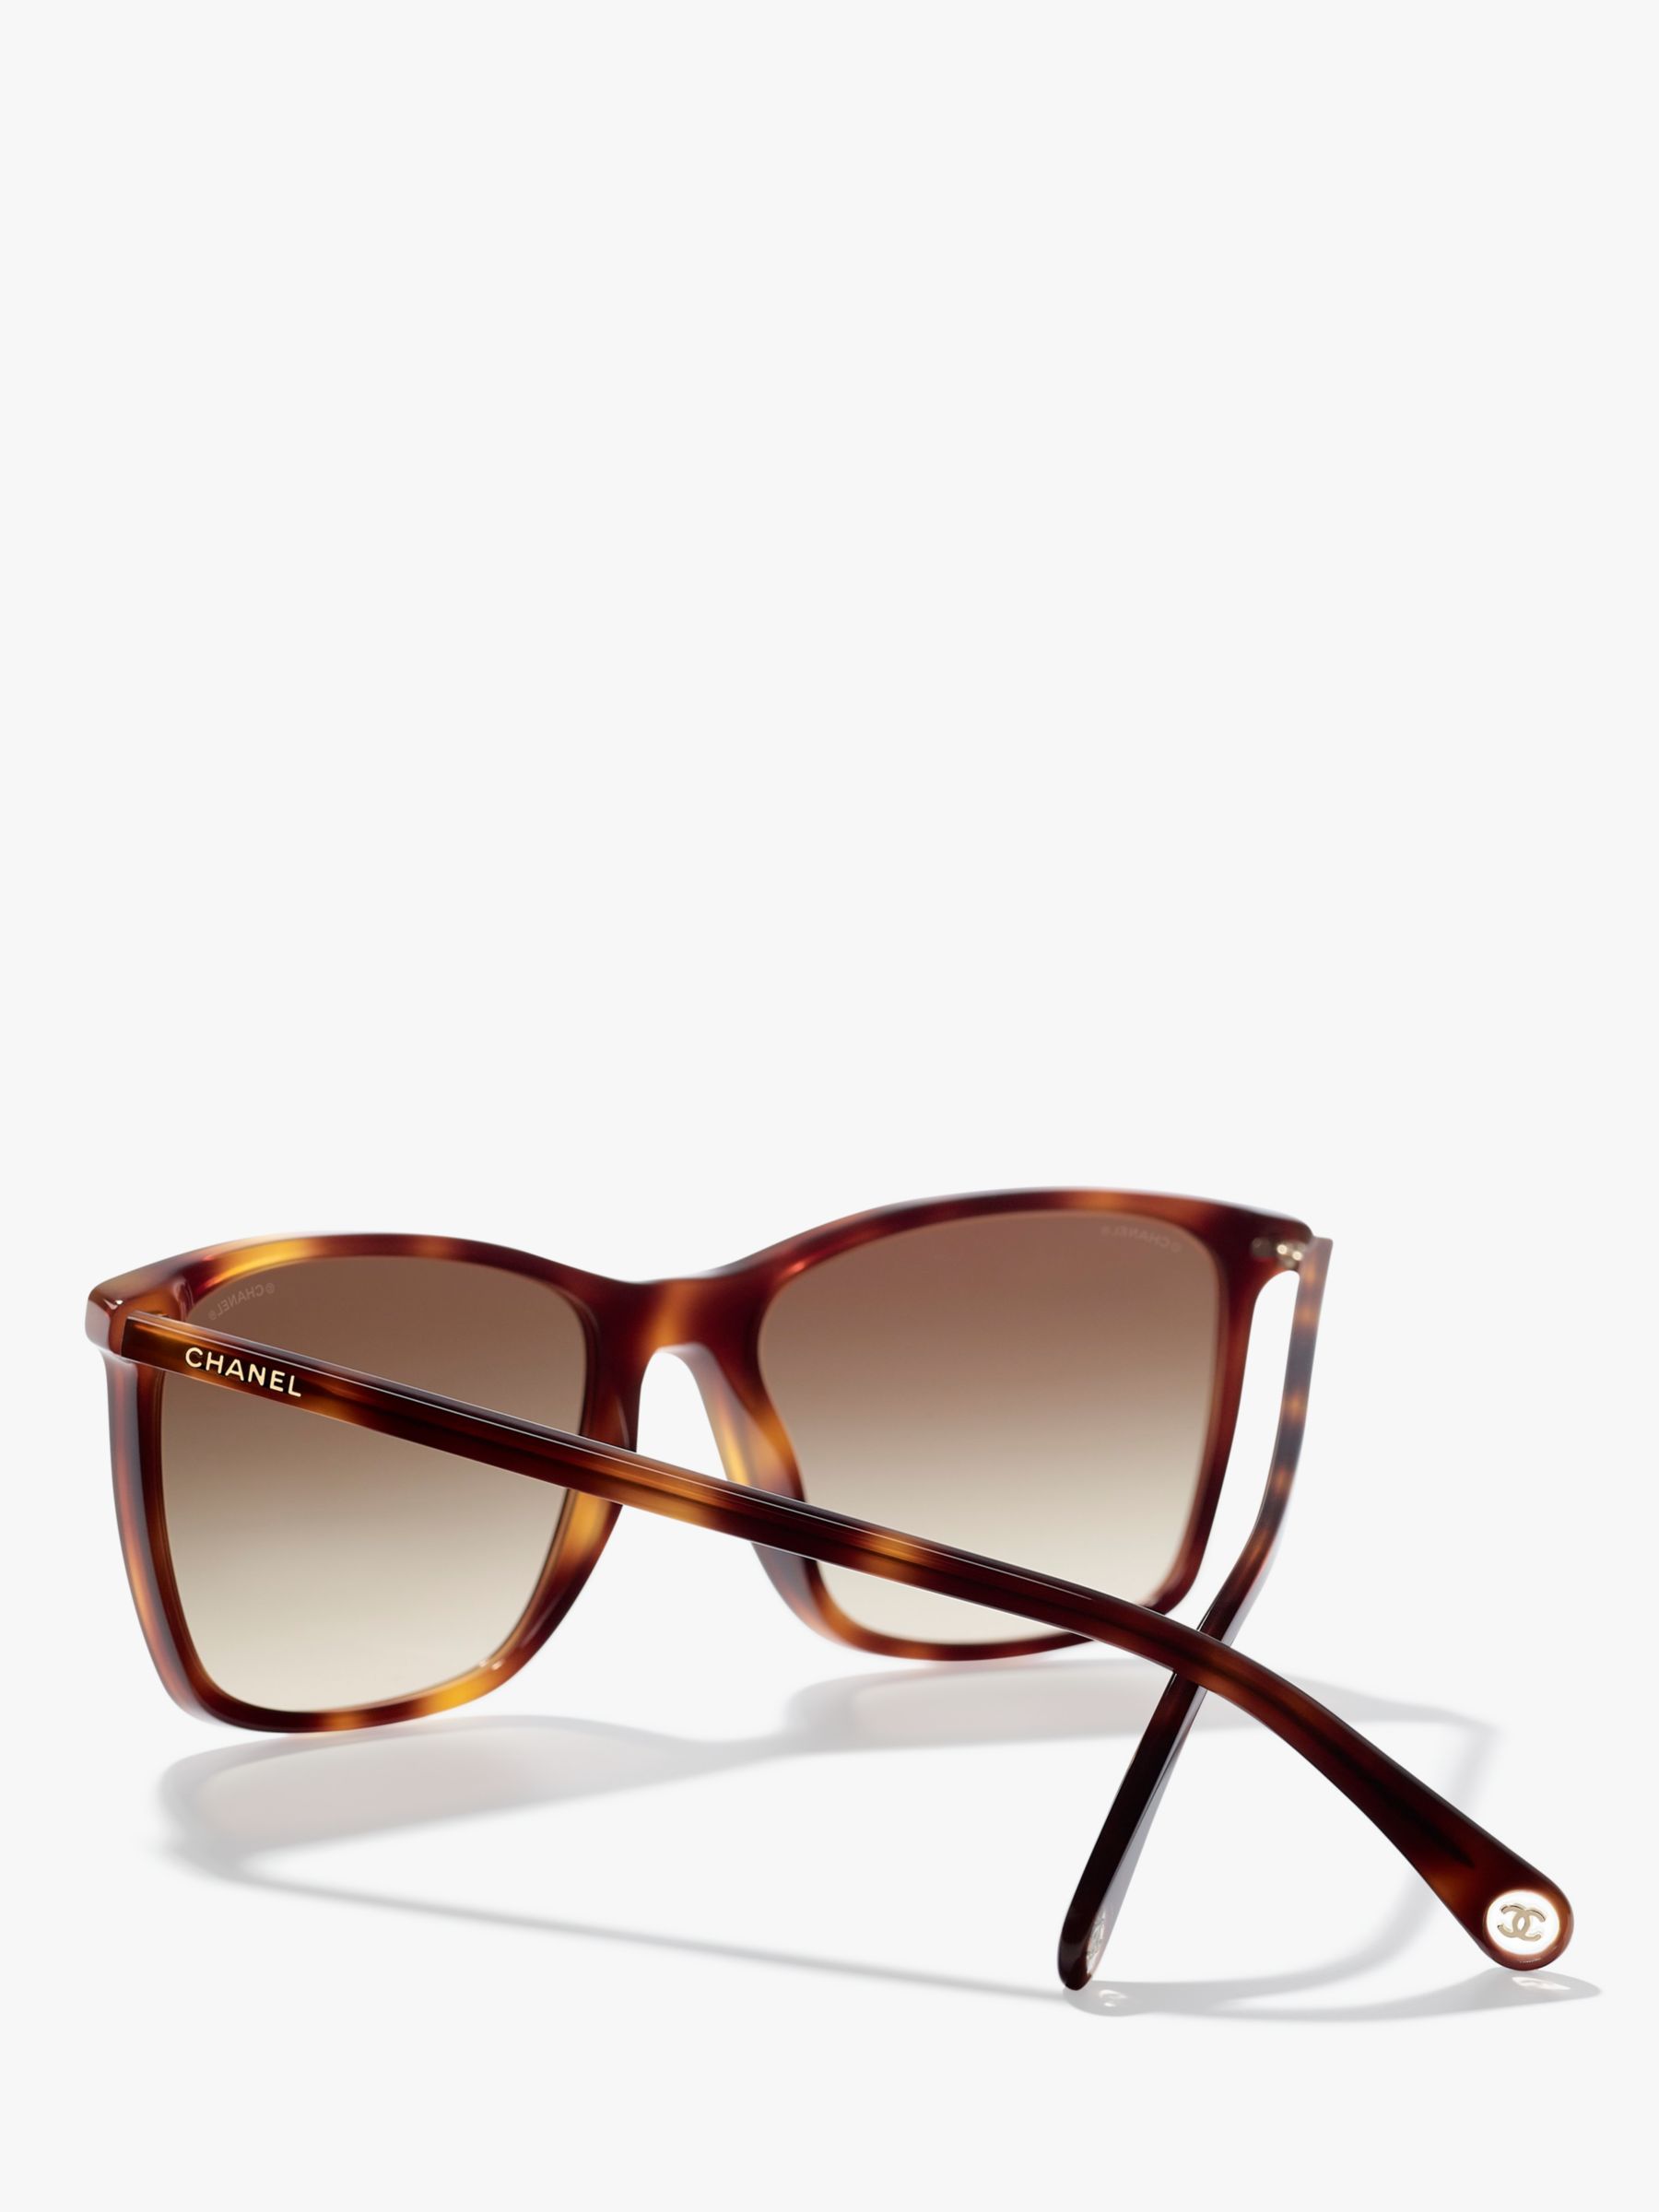 CHANEL Rectangular Sunglasses CH5447 Havana/Brown Gradient at John Lewis &  Partners